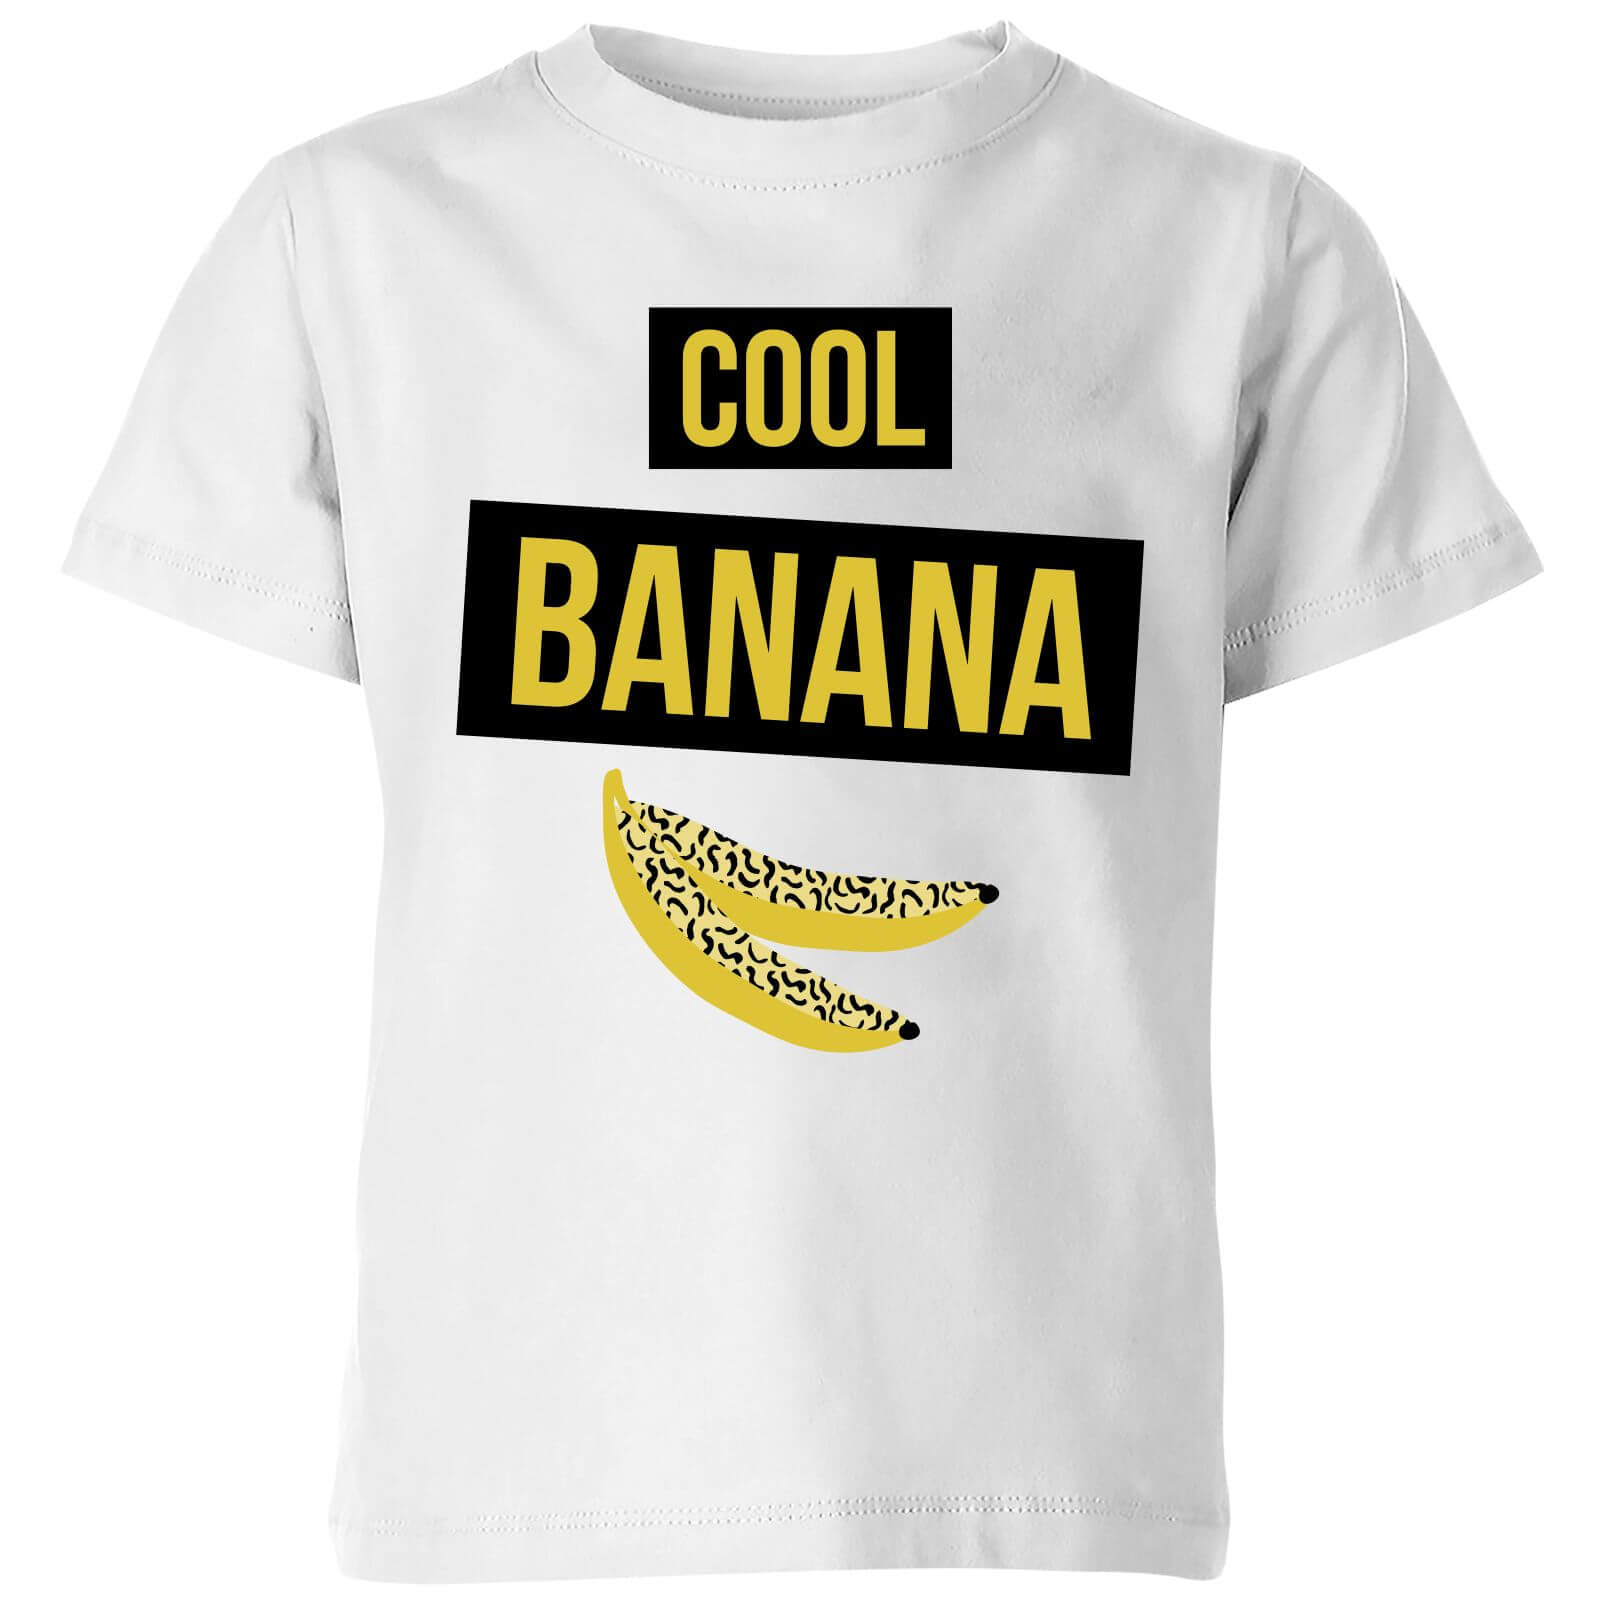 My Little Rascal Cool Banana Kids' T-Shirt - White - 3-4 Years - White